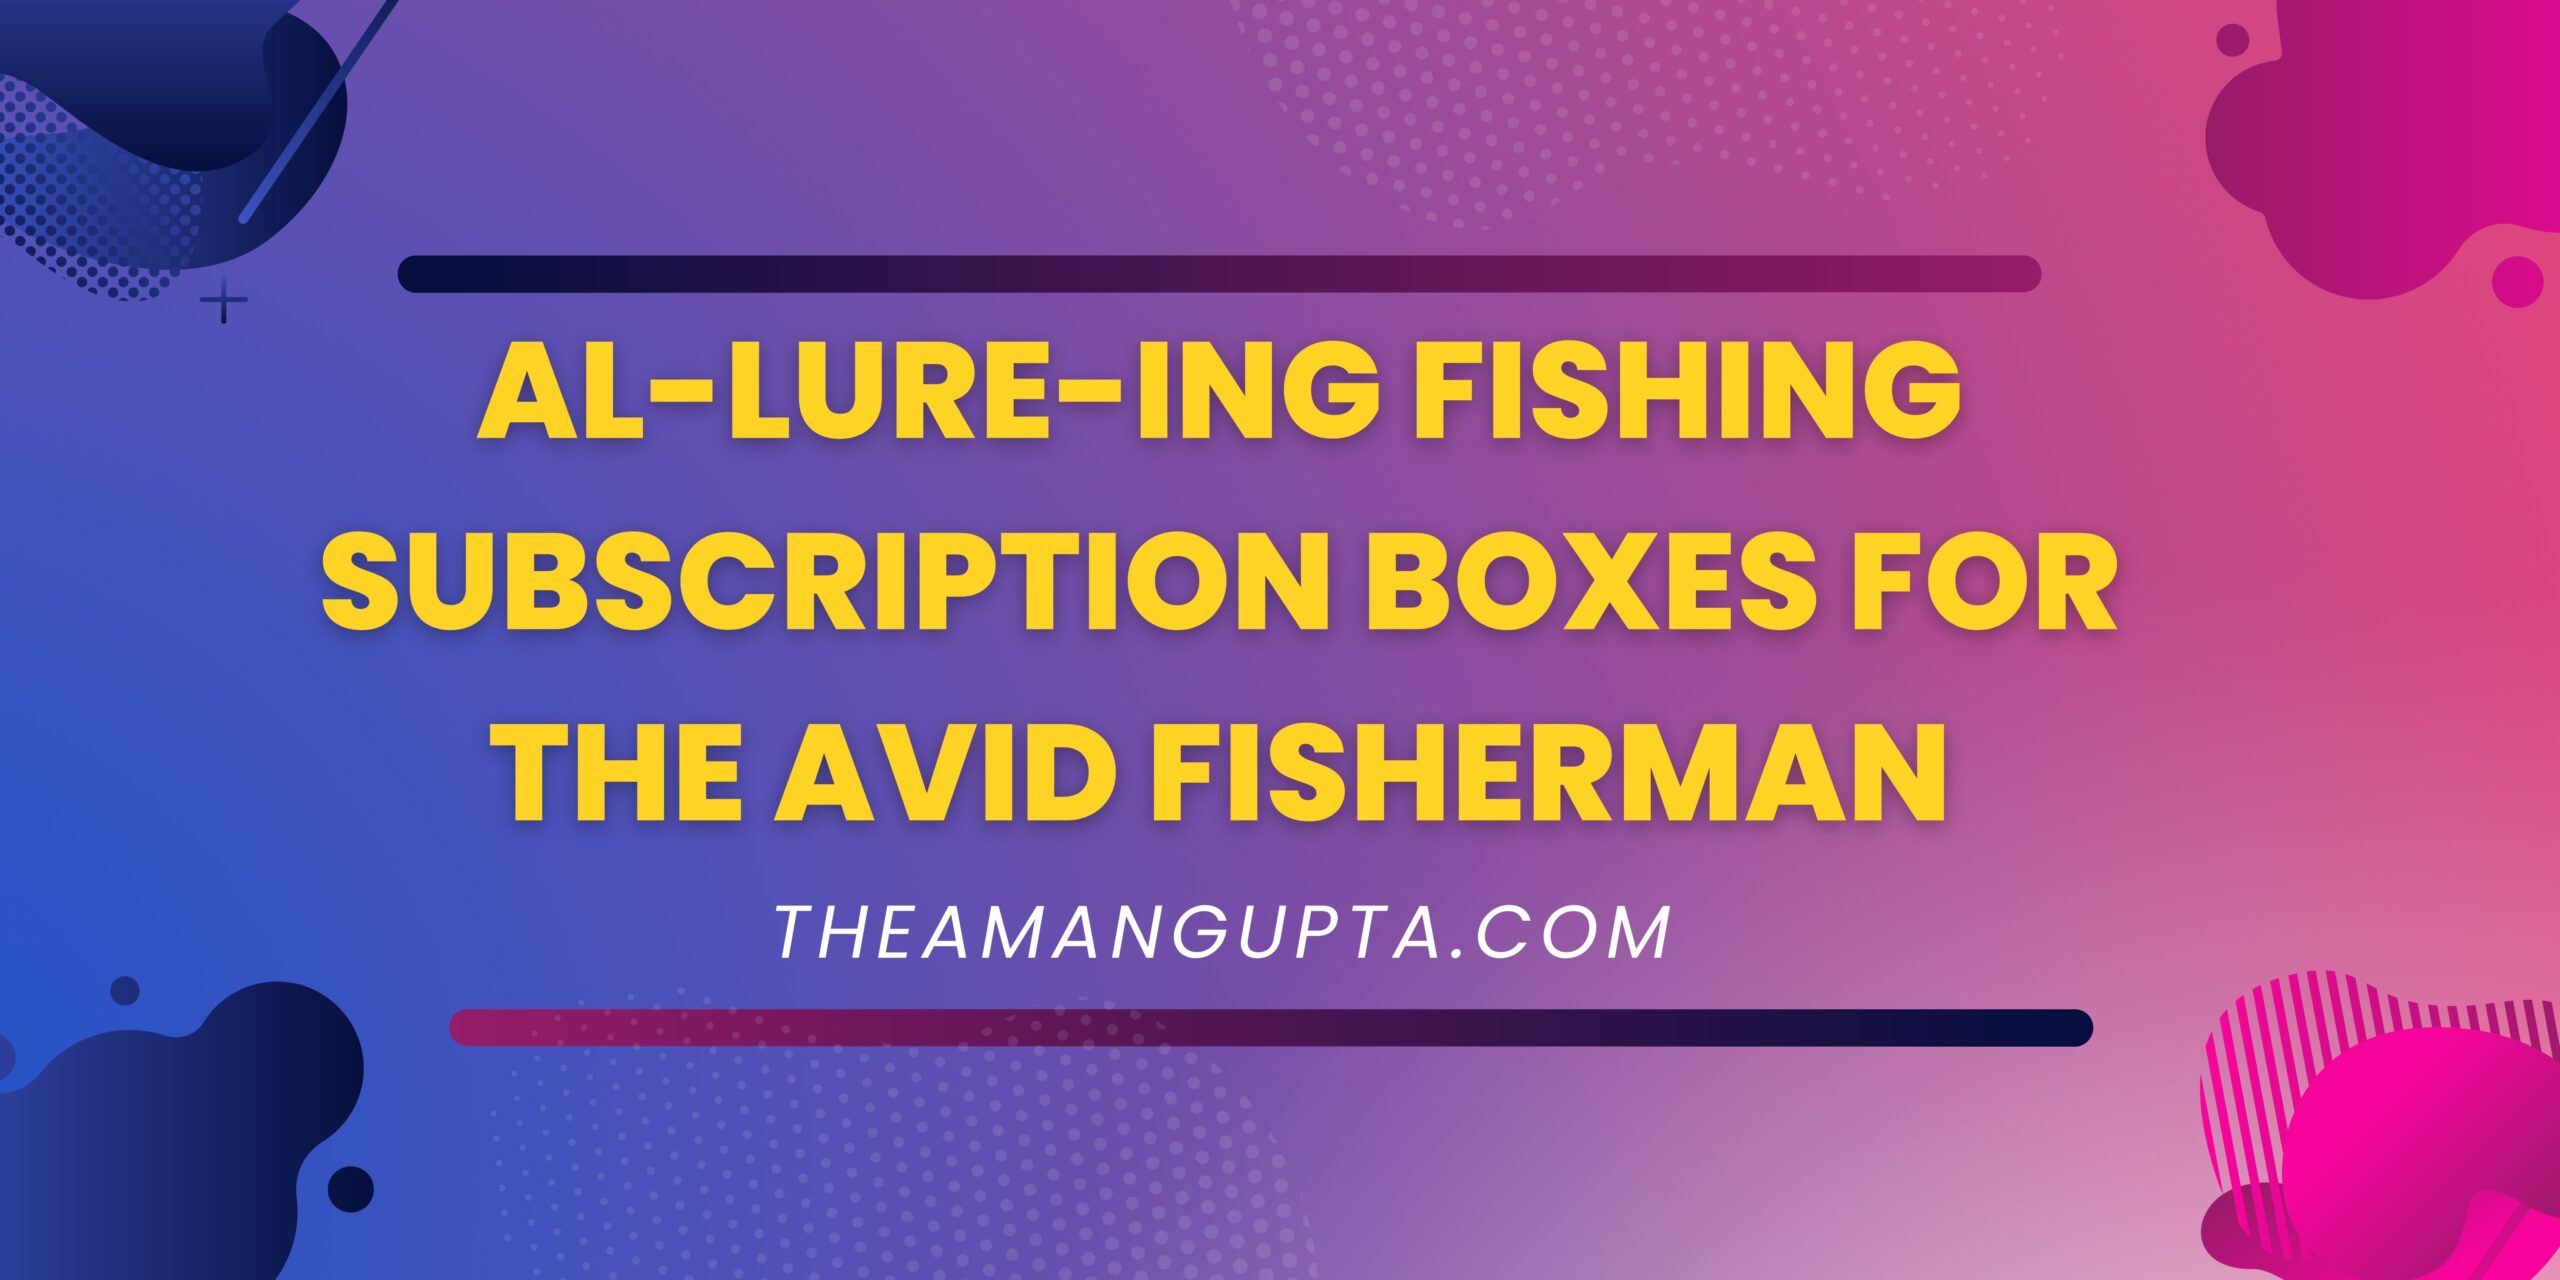 Al-lure-ing Fishing Subscription Boxes for the Avid Fisherman|Avid Fisherman|Theamangupta|Theamangupta